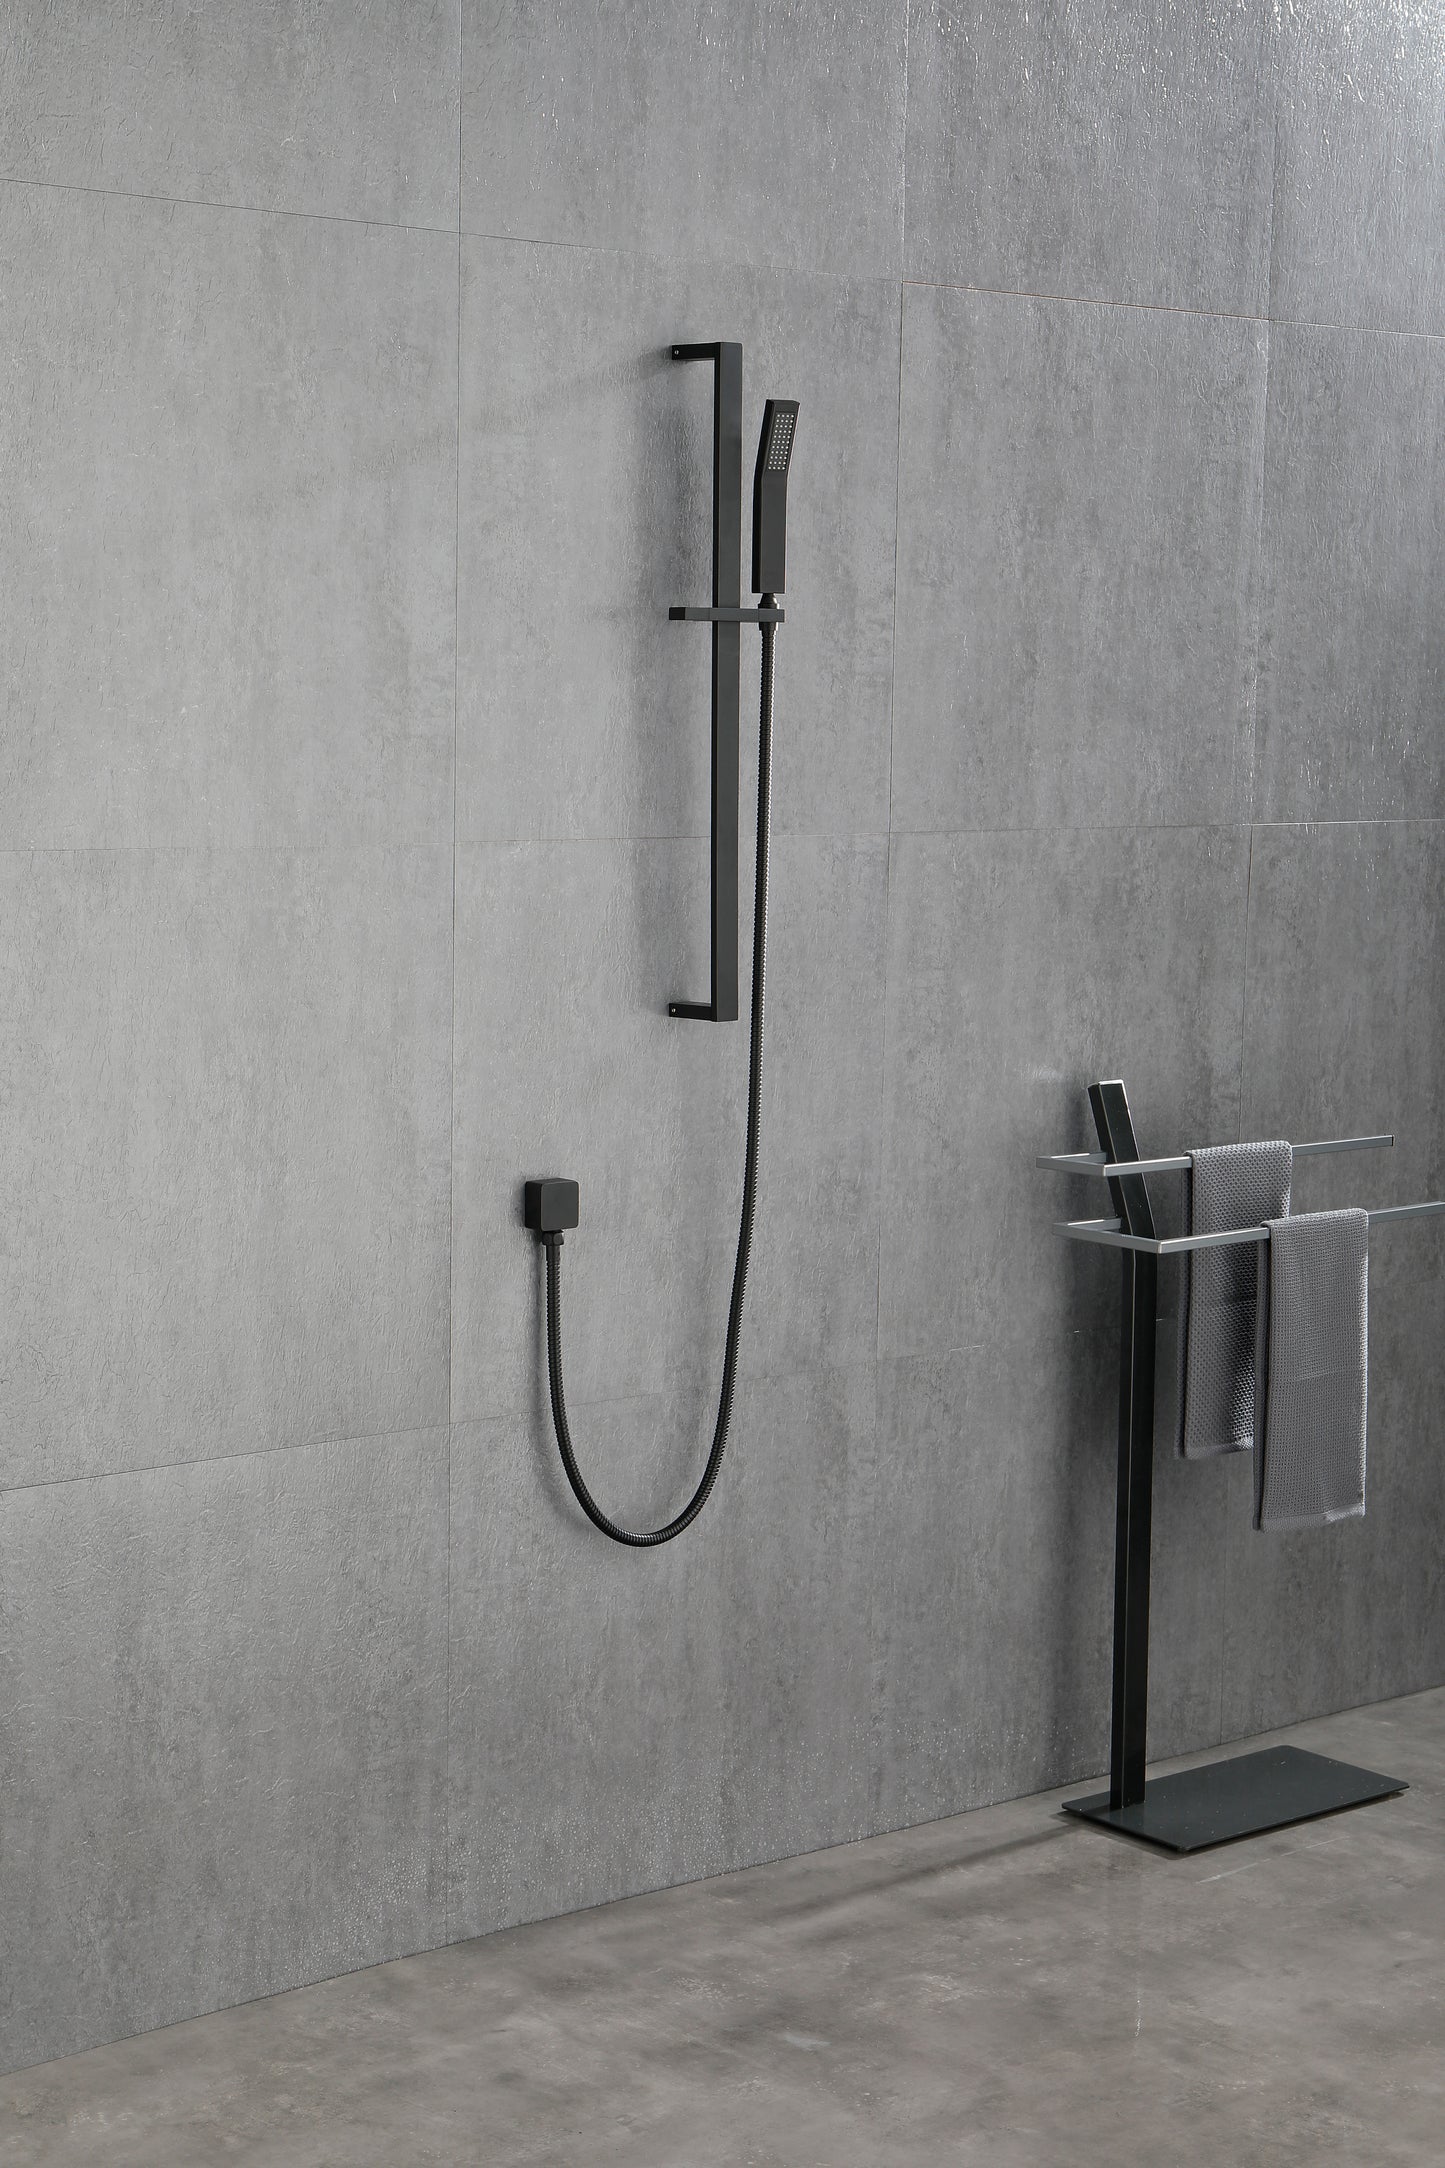 Shower System 10Inch Square Bathroom Luxury Rain Mixer Shower Combo Set Pressure Balanced Shower System with Shower Head, Hand Shower, Slide Bar, Shower Arm, Hose, and Valve Trim